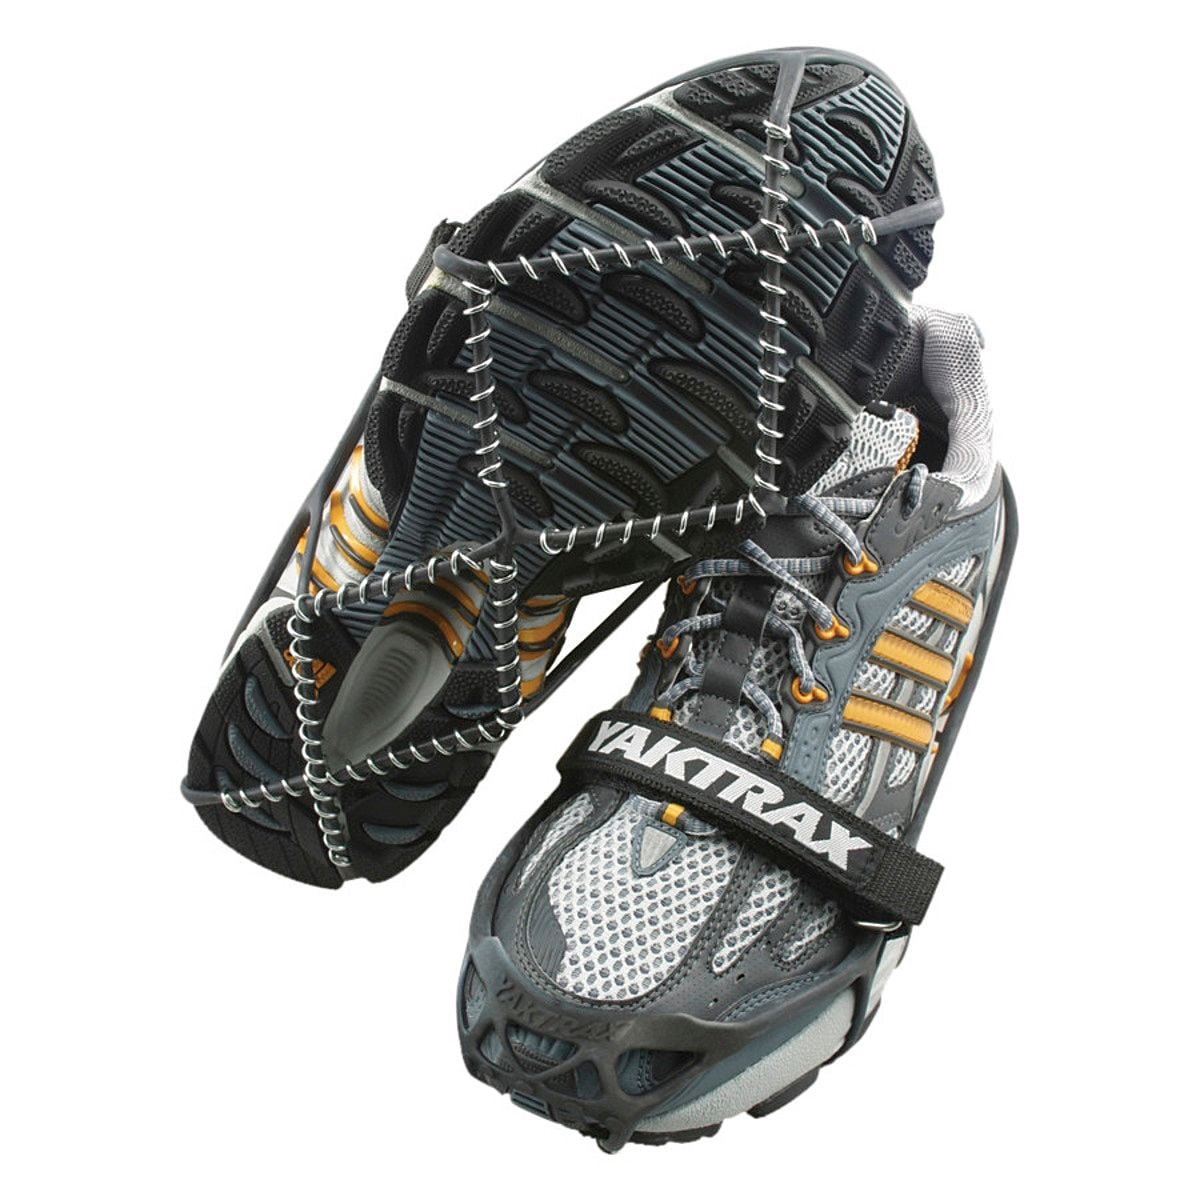 YAKTRAX Pro Shoe Crampon | Backcountry.com